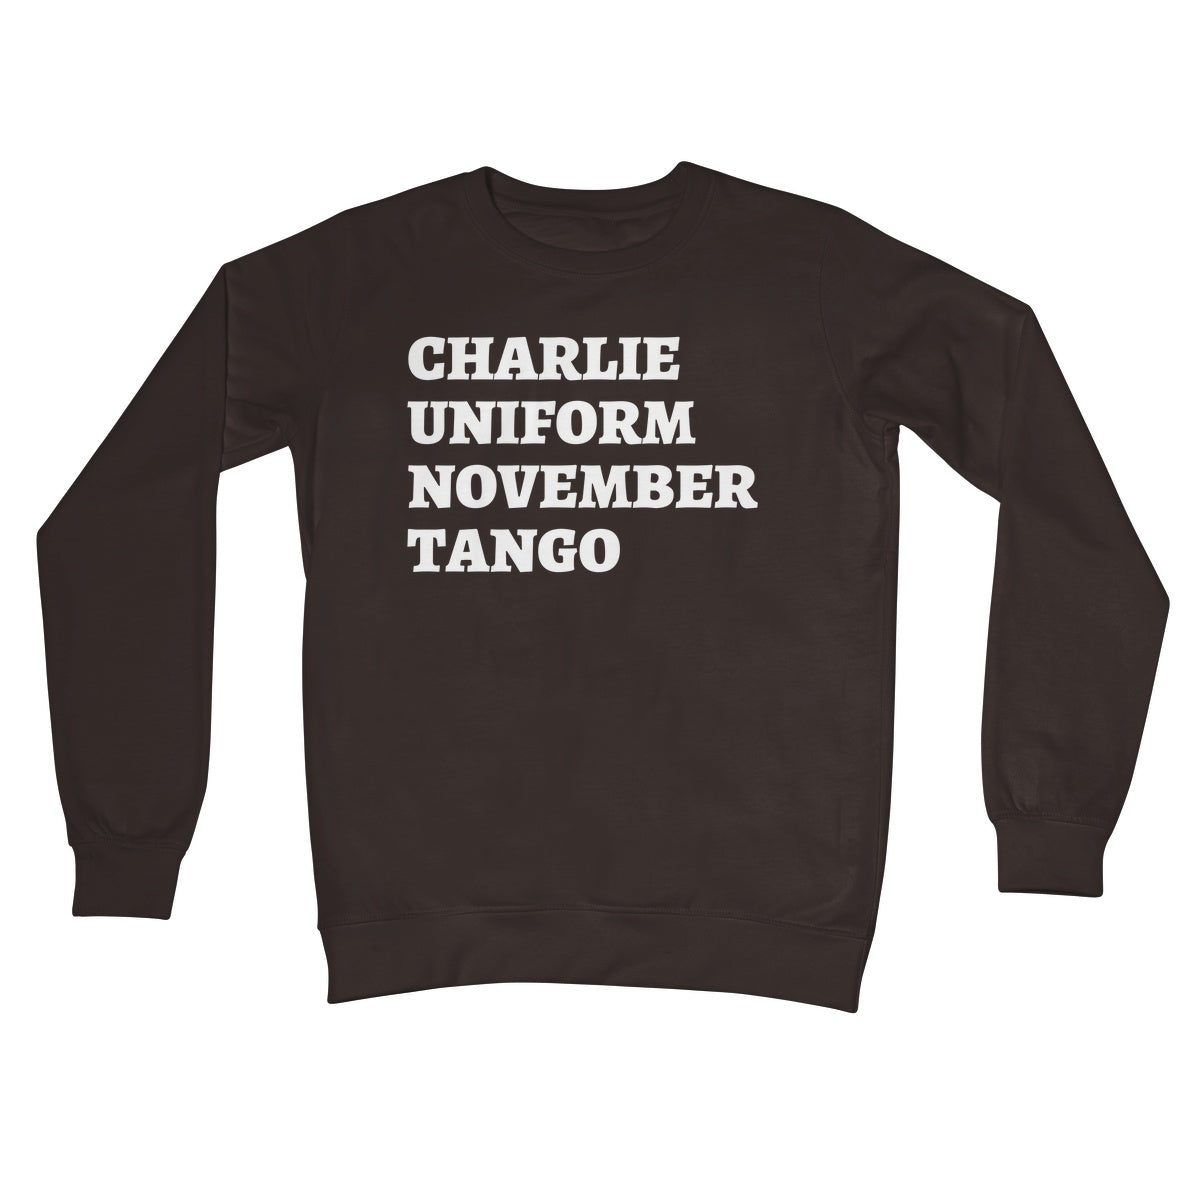 charlie uniform november tango jumper brown